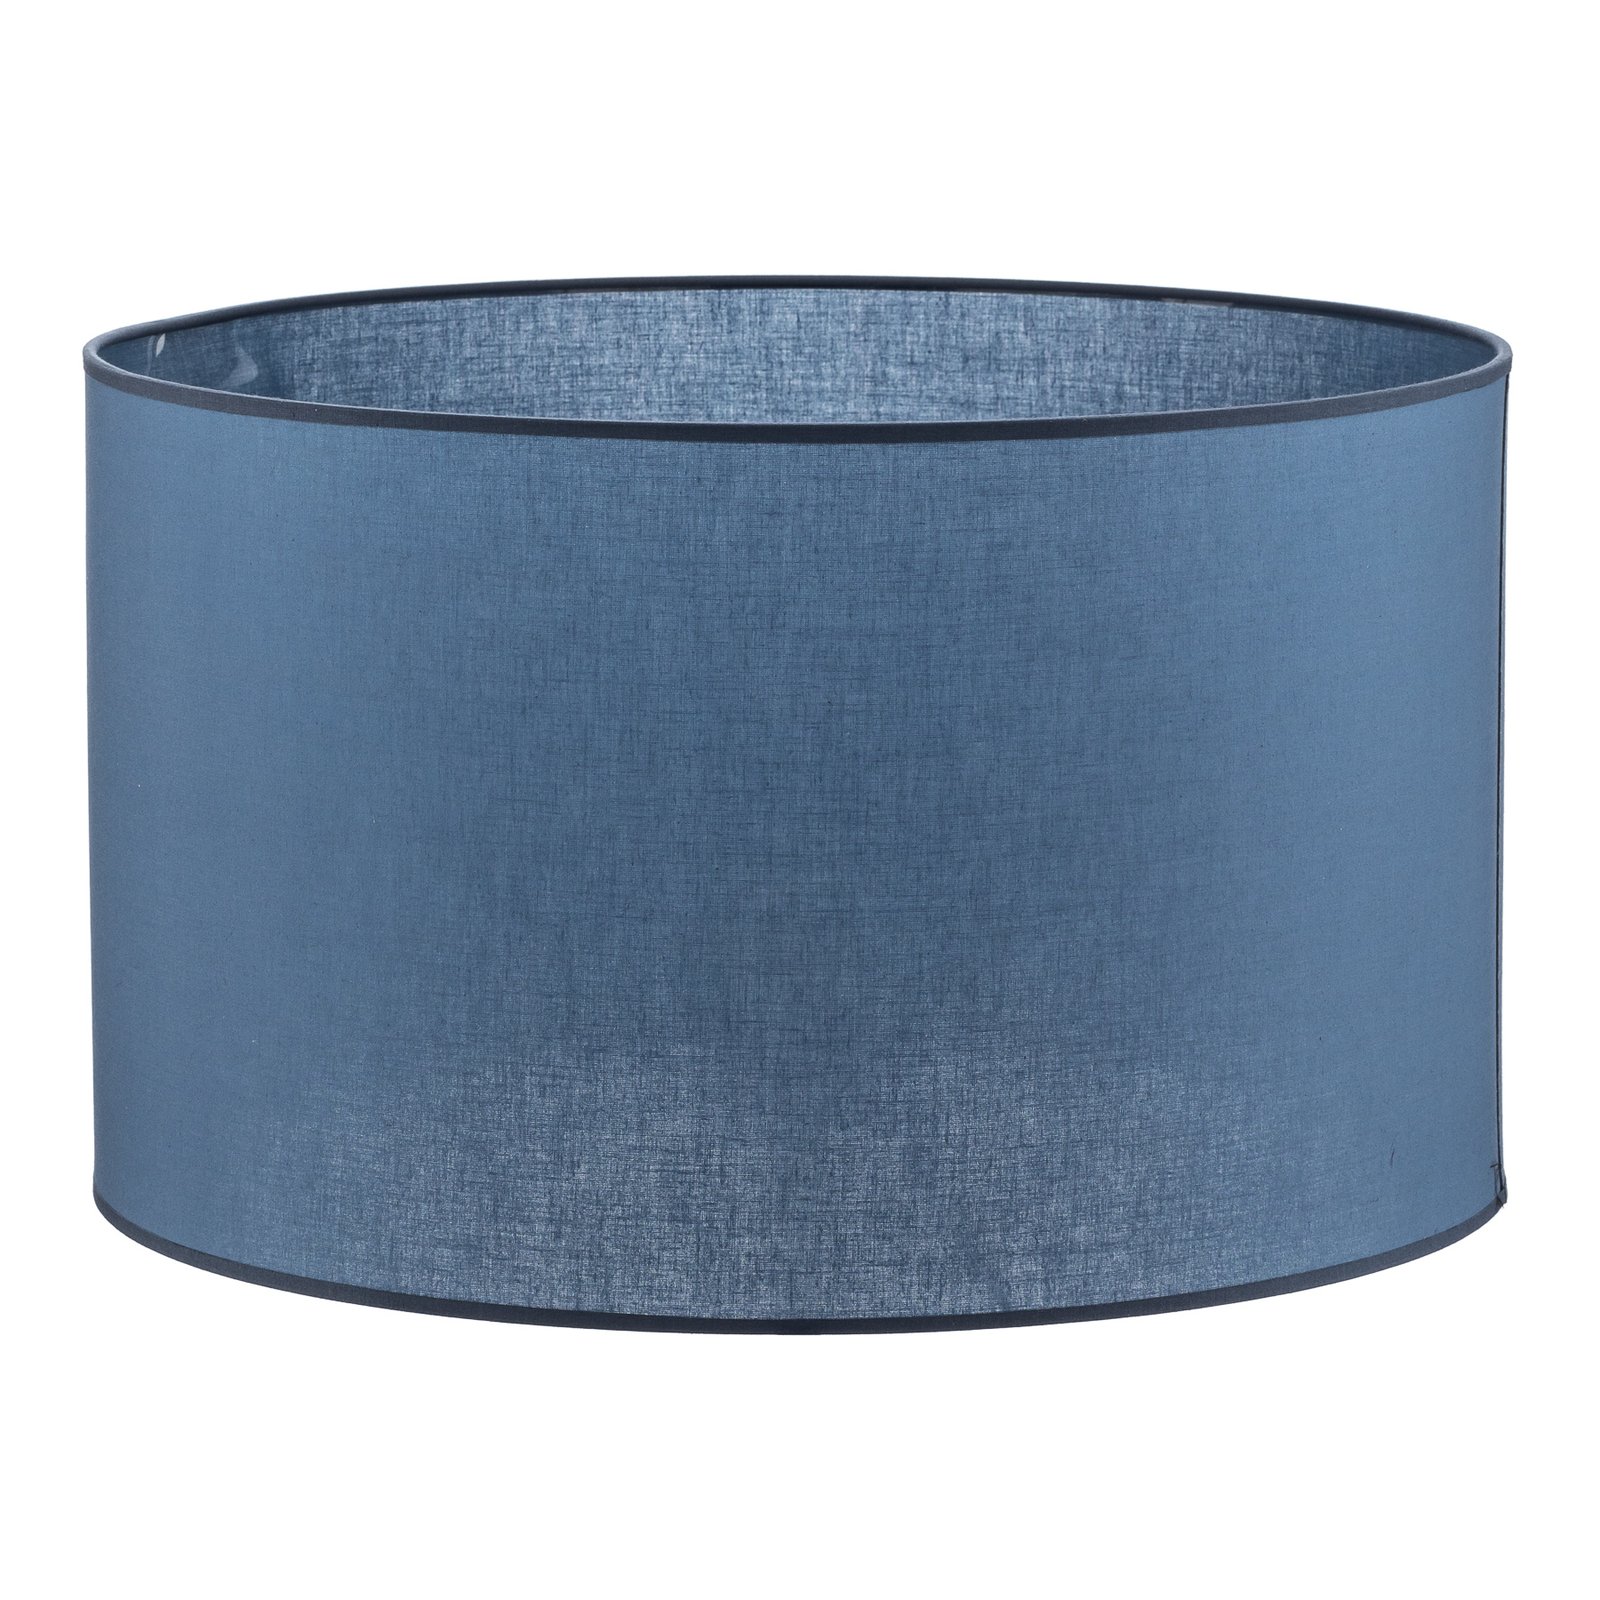 Roller lampshade Ø 50 cm, dark blue